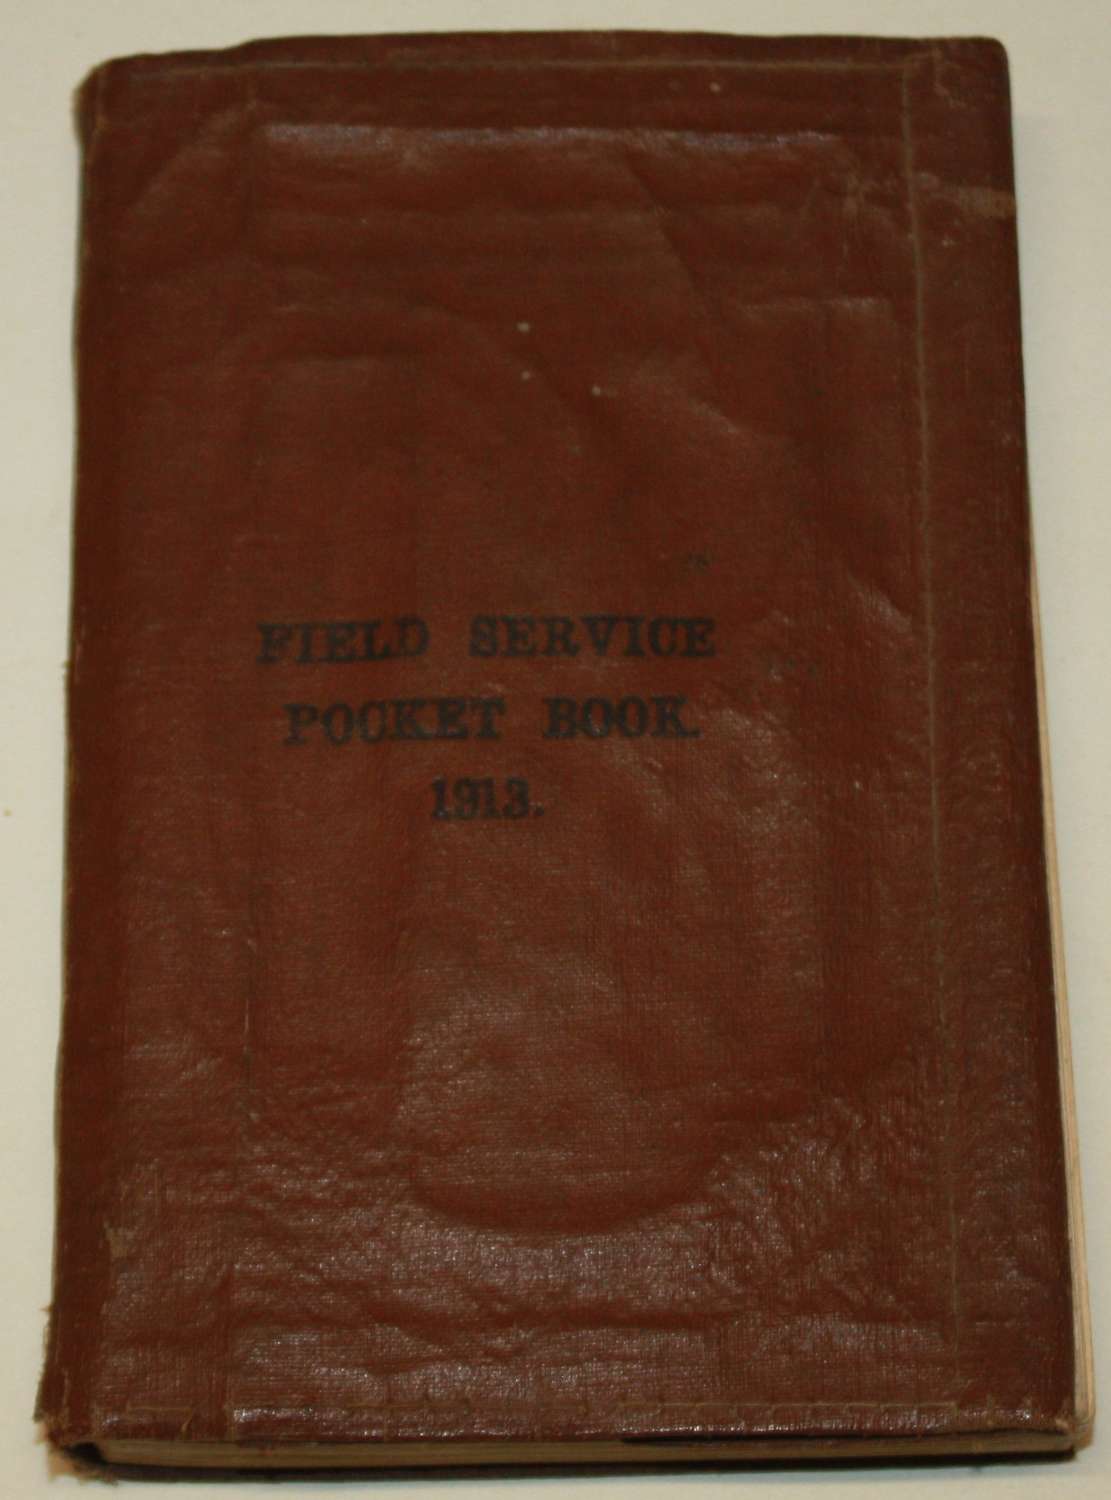 A WWI 1913 / 14 FIELD SERVICE POCKET BOOK